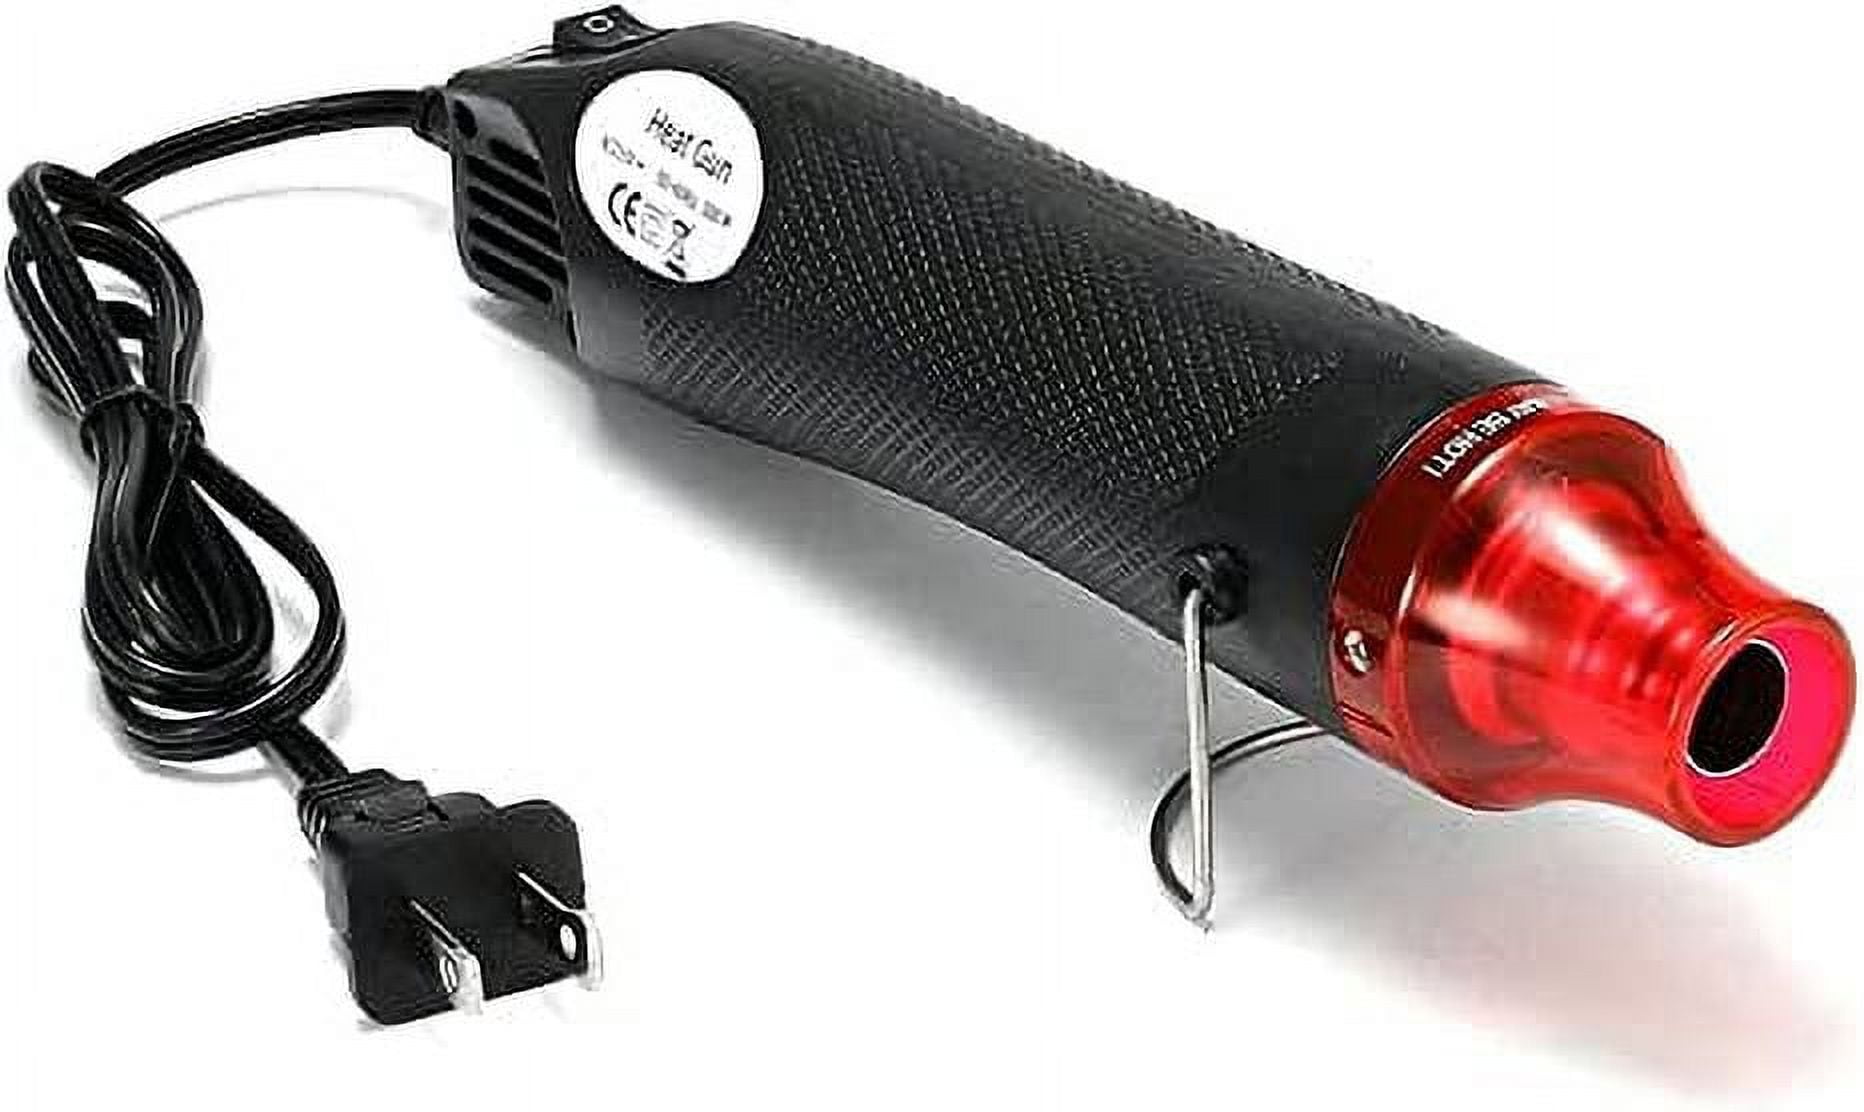 DODOING Heat Gun for Crafts, Mini Heat Gun for Epoxy Resin, 300W